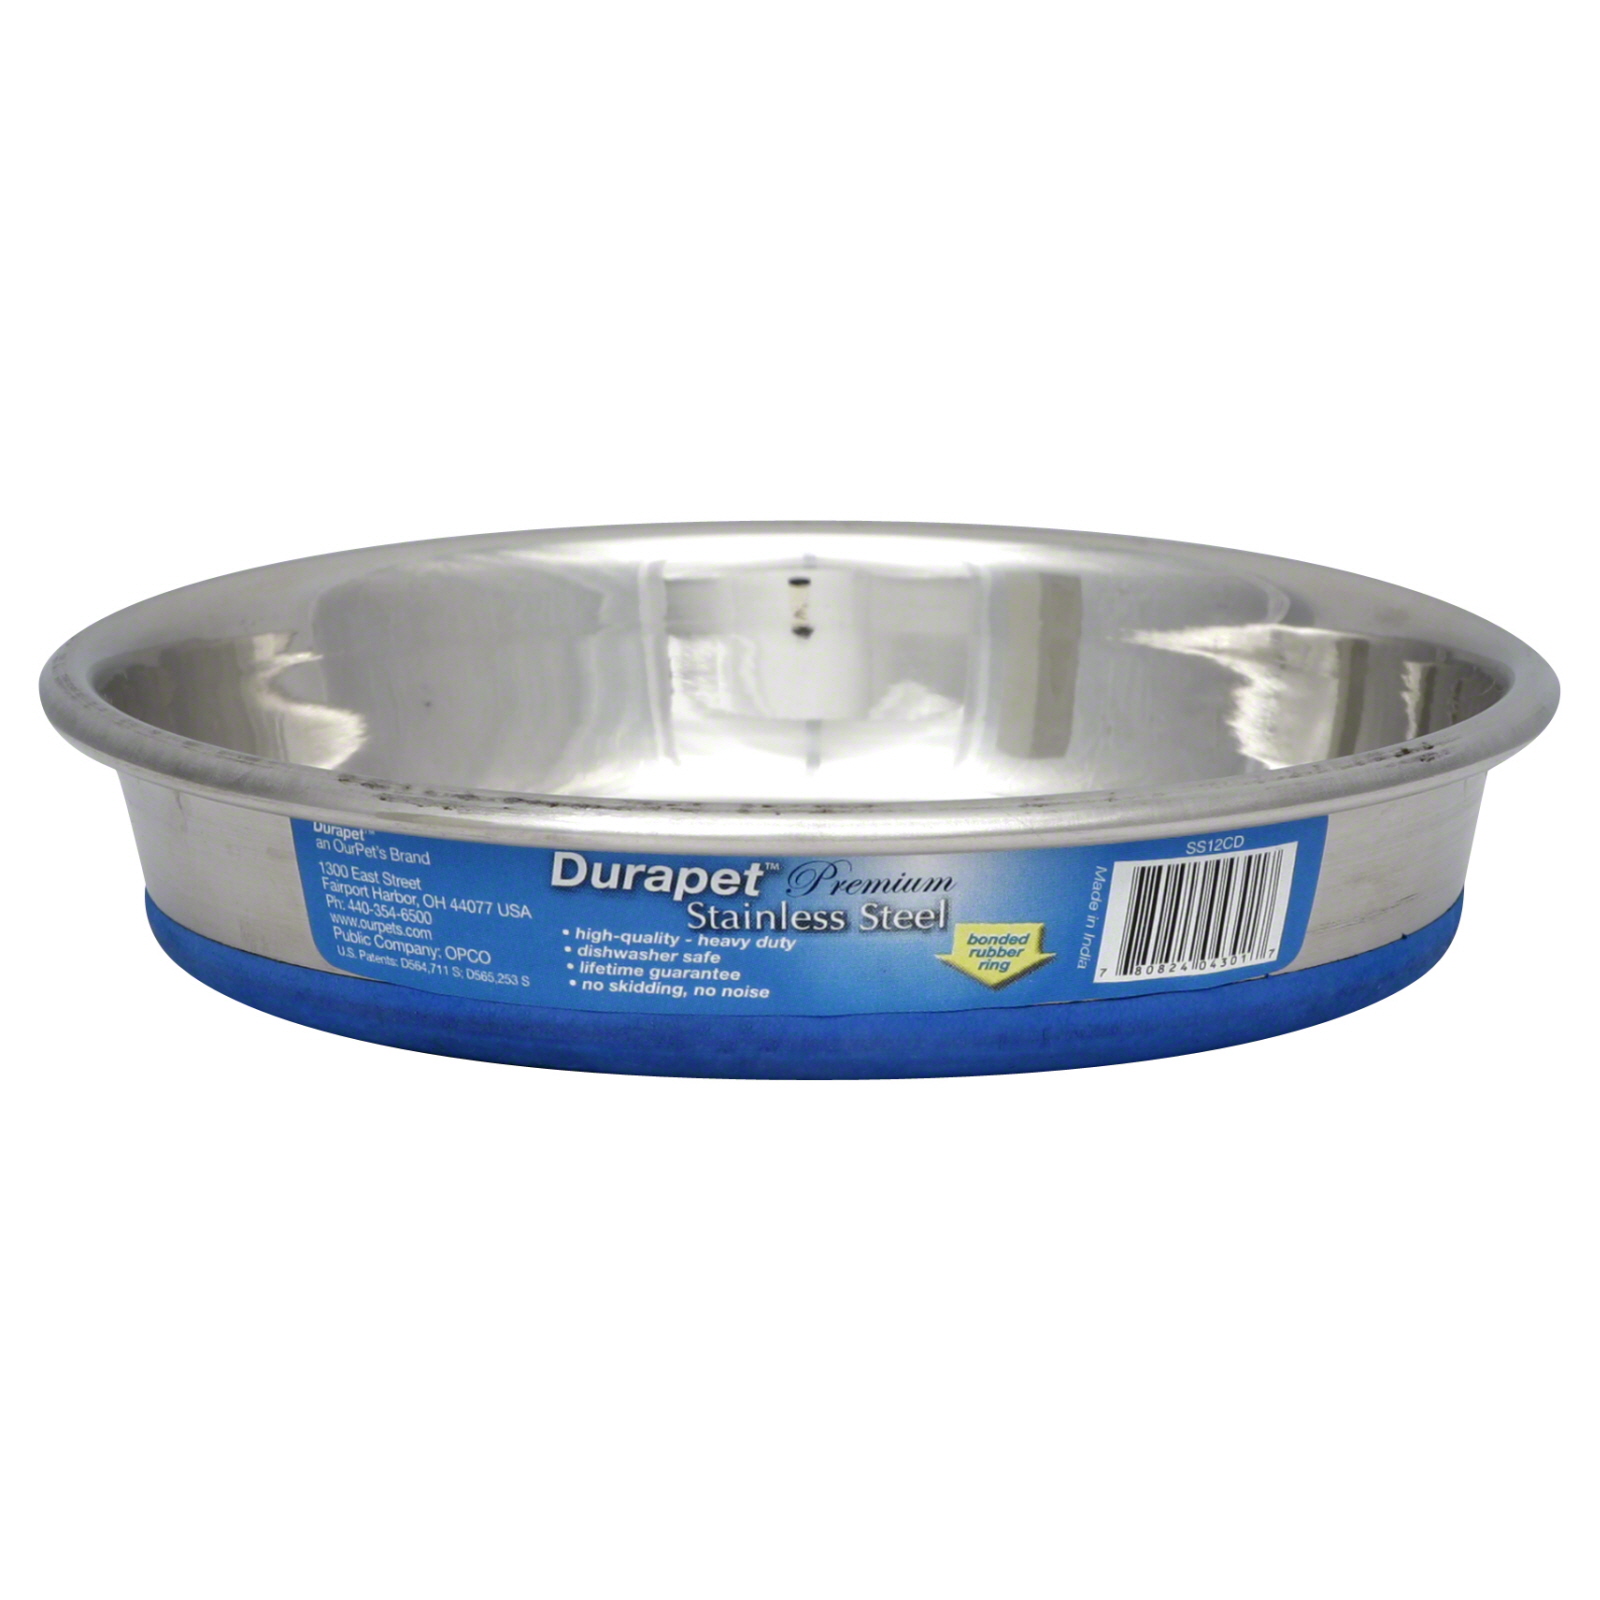 OurPet's Durapet Bowl, Stainless Steel 1 - 12 oz (0.35 lt) bowl